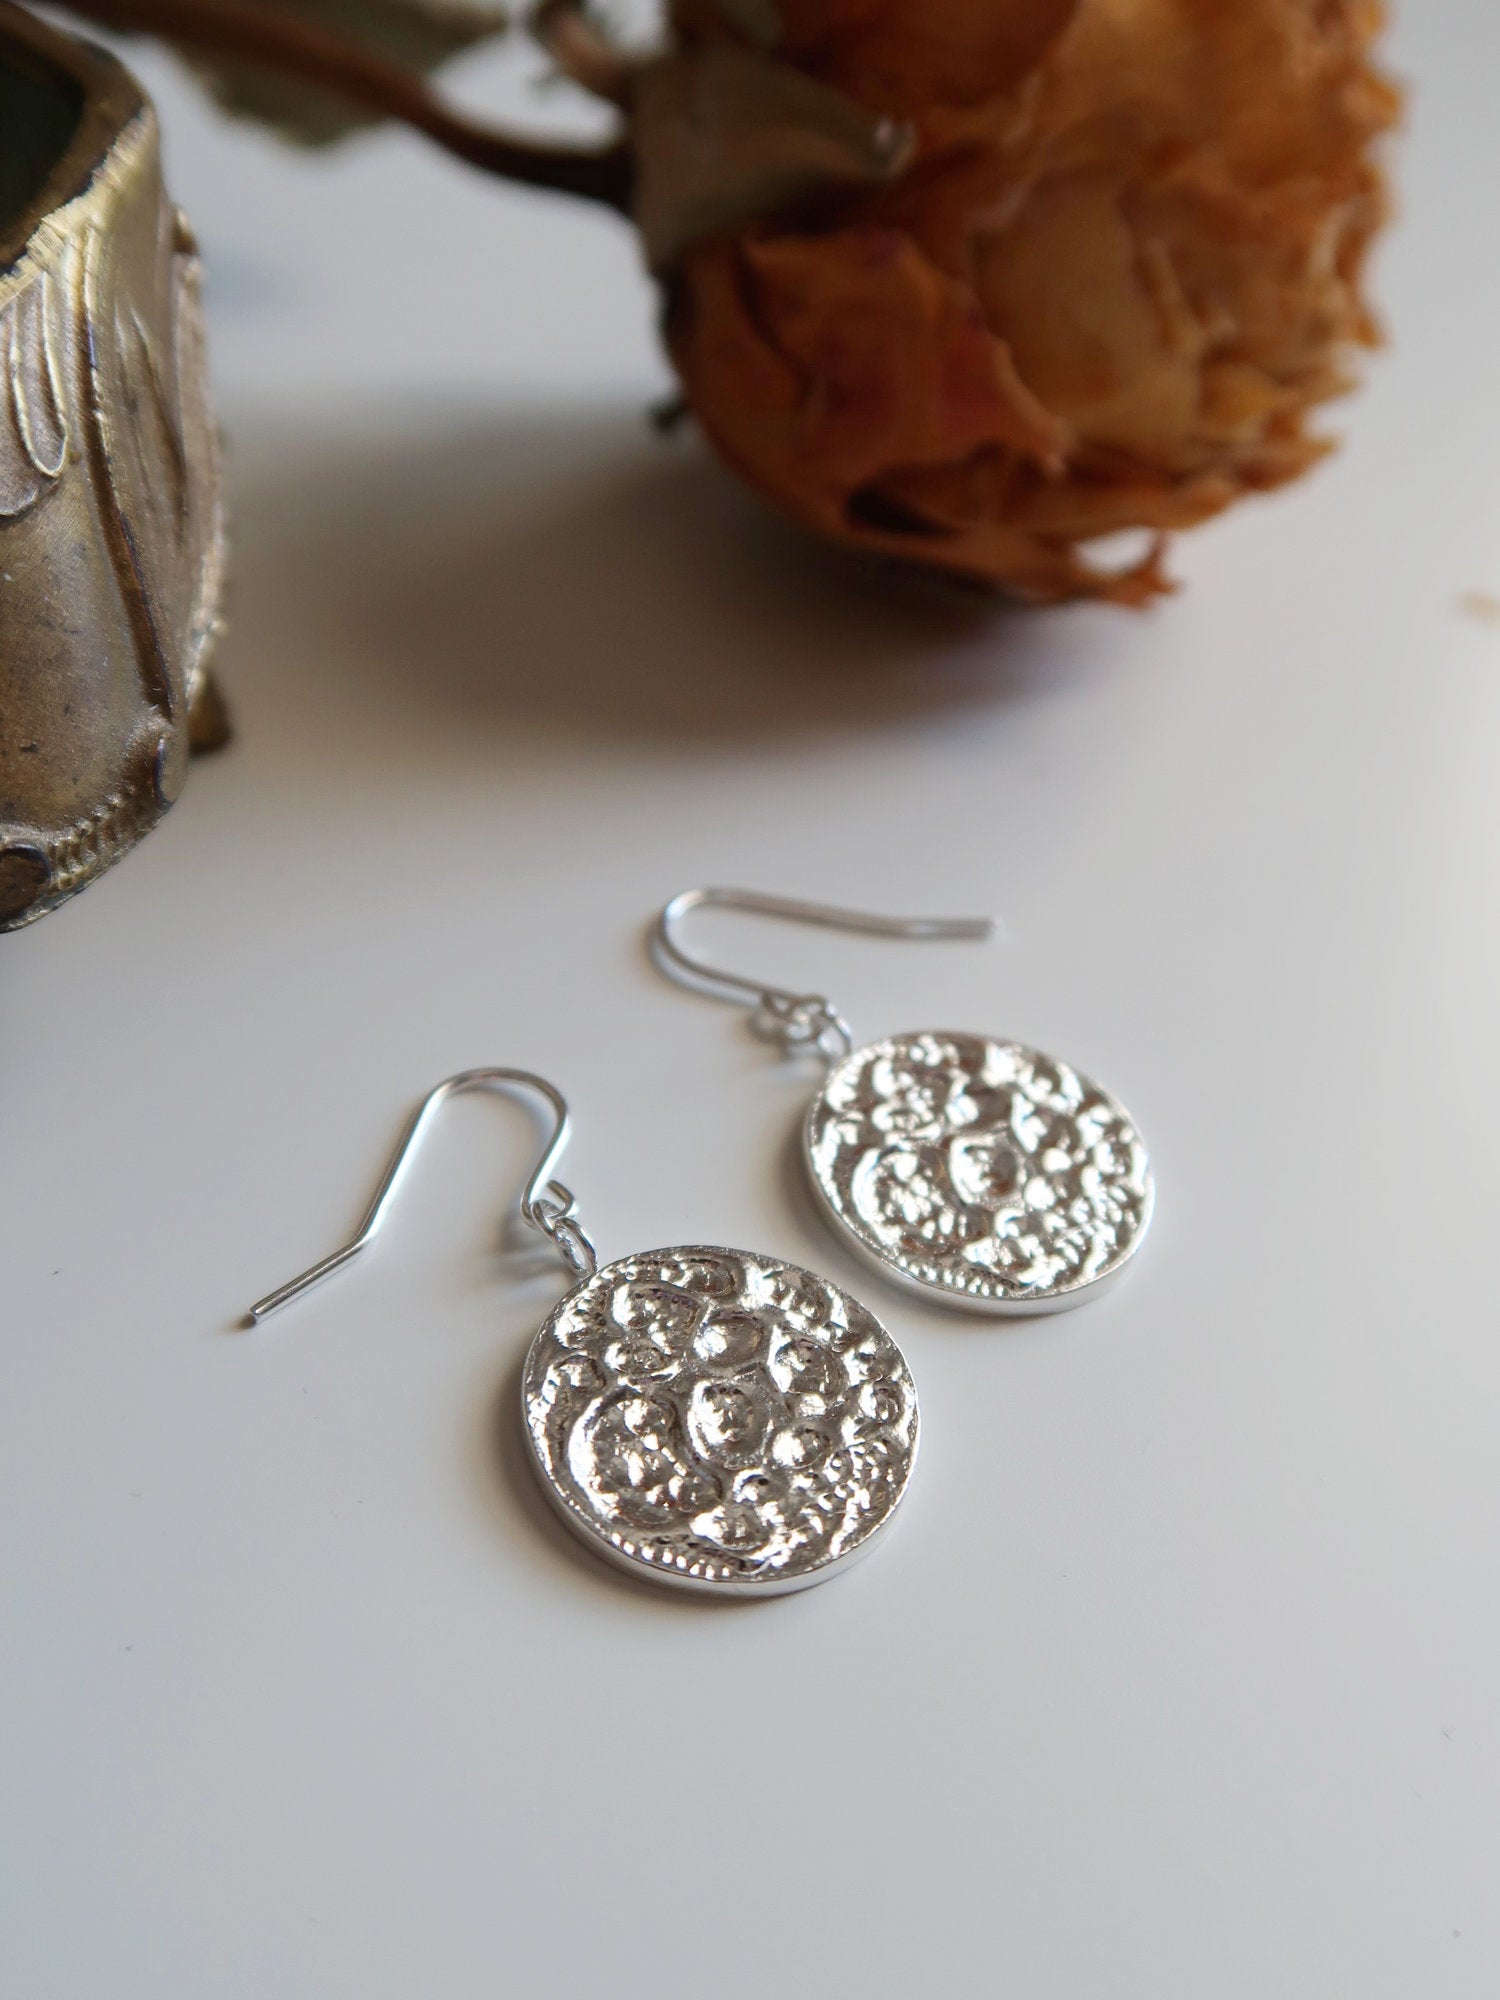 Textured Moon Earrings - Magpie Jewellery